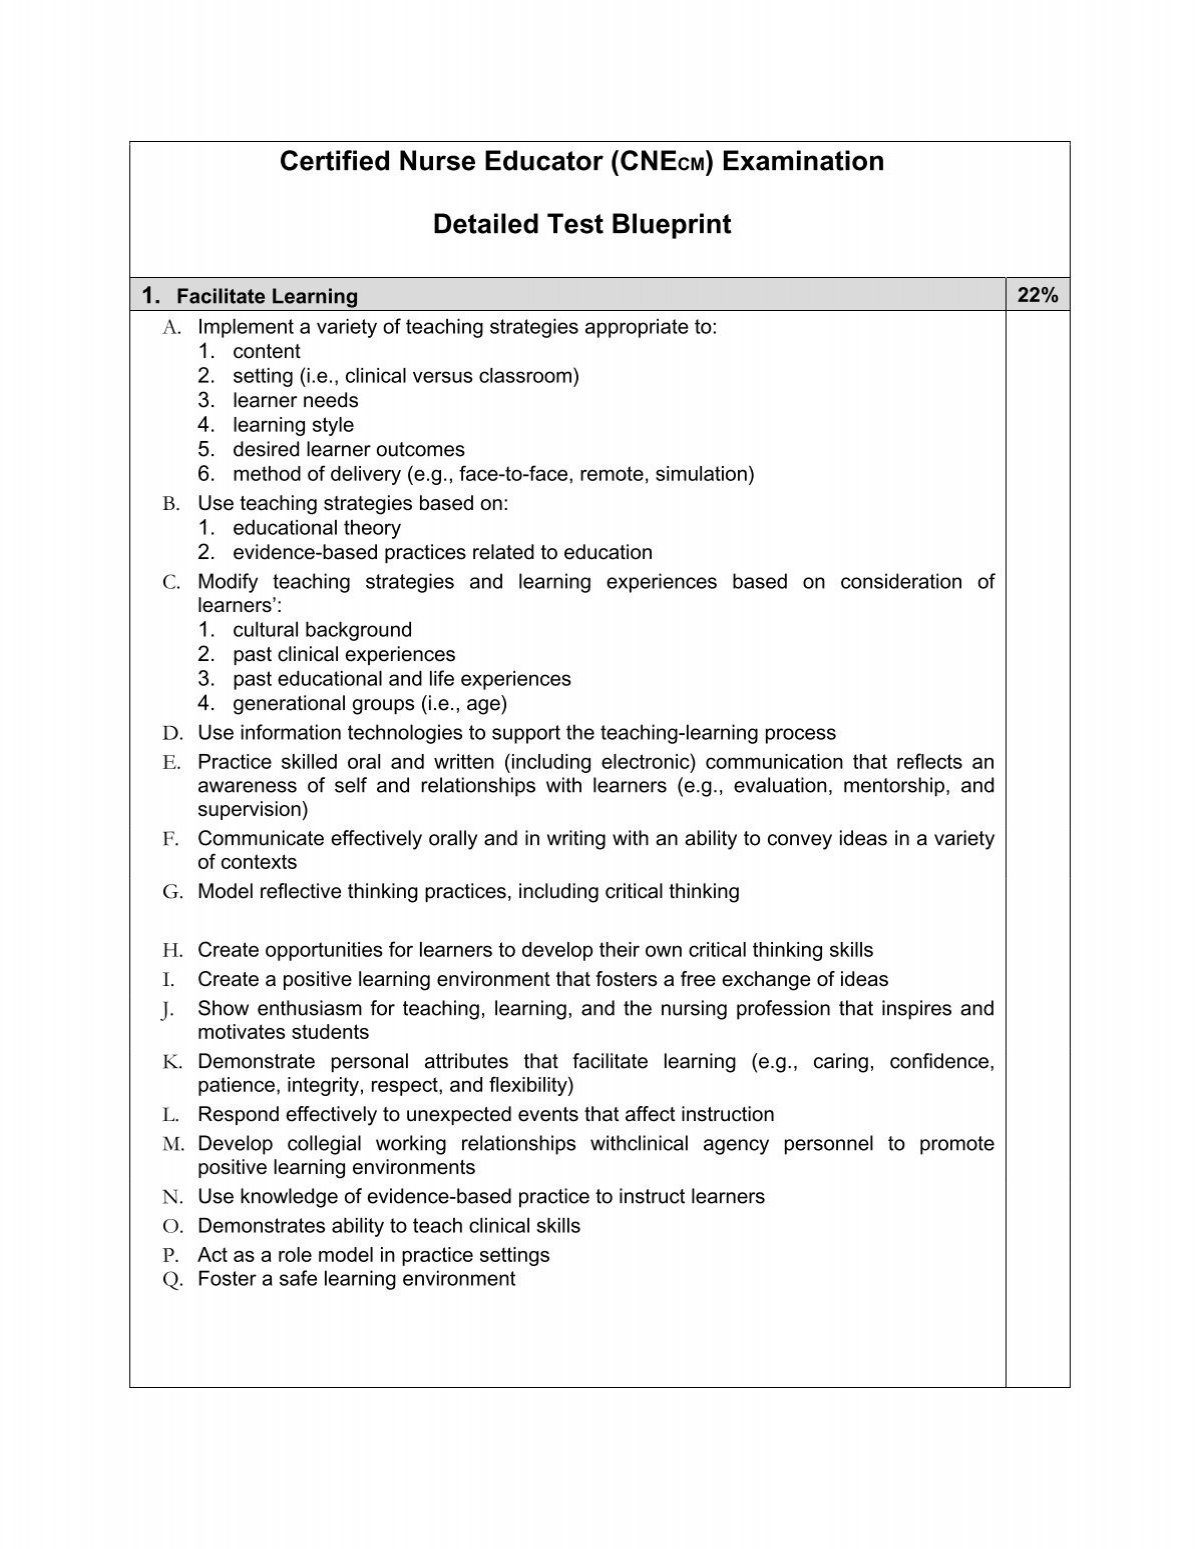 detailed-test-blueprint-national-league-for-nursing